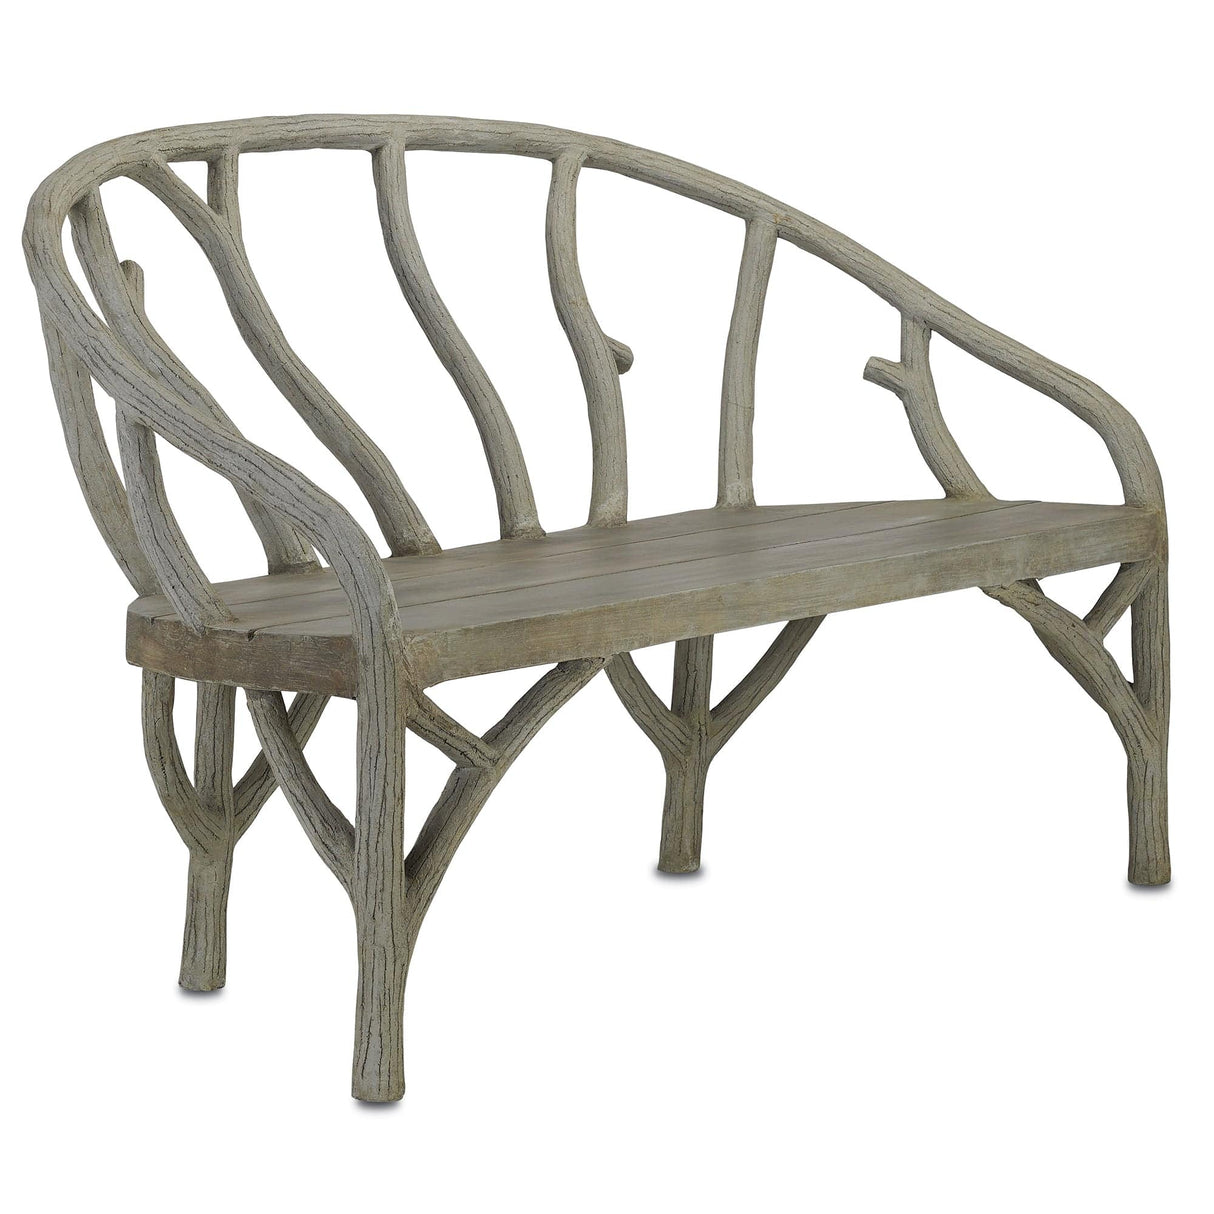 Currey & Company Arbor Bench Furniture currey-co-2700 00604310294267